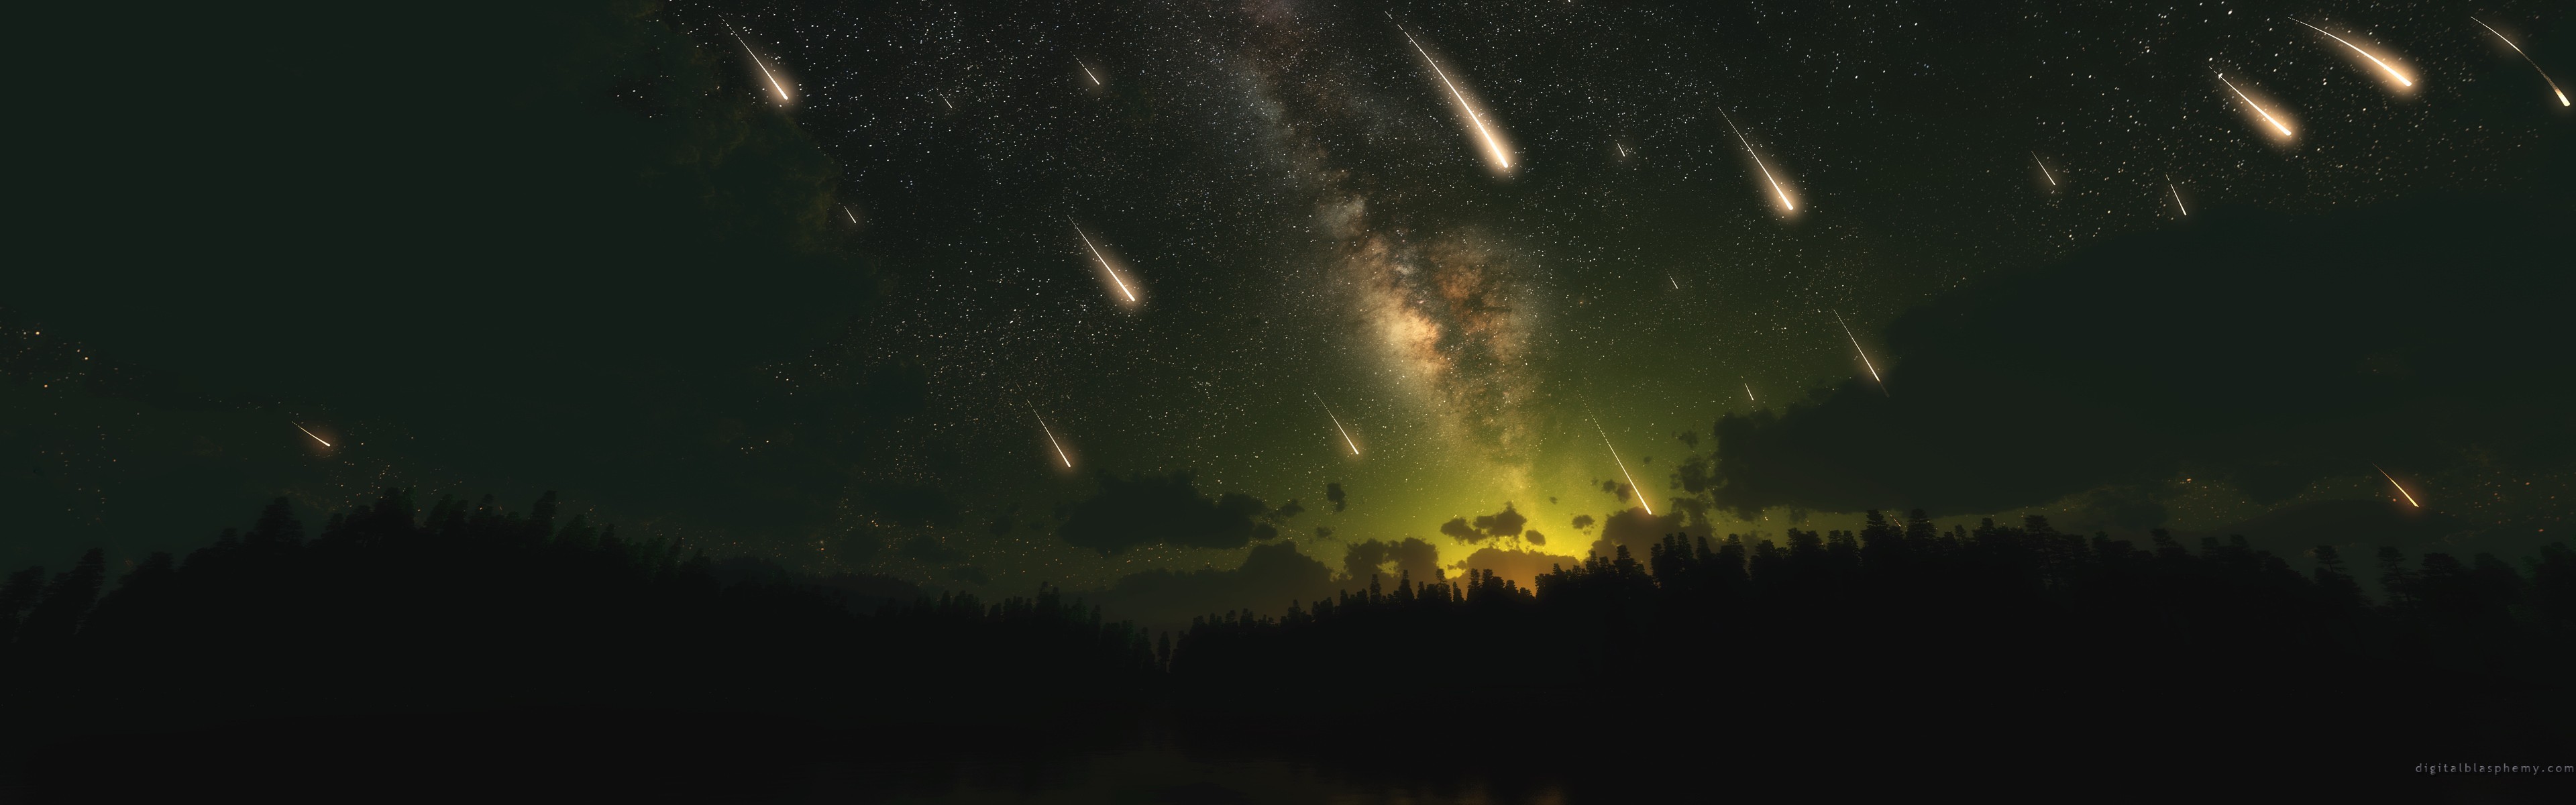 General 3840x1200 meteors dark night sky landscape nature